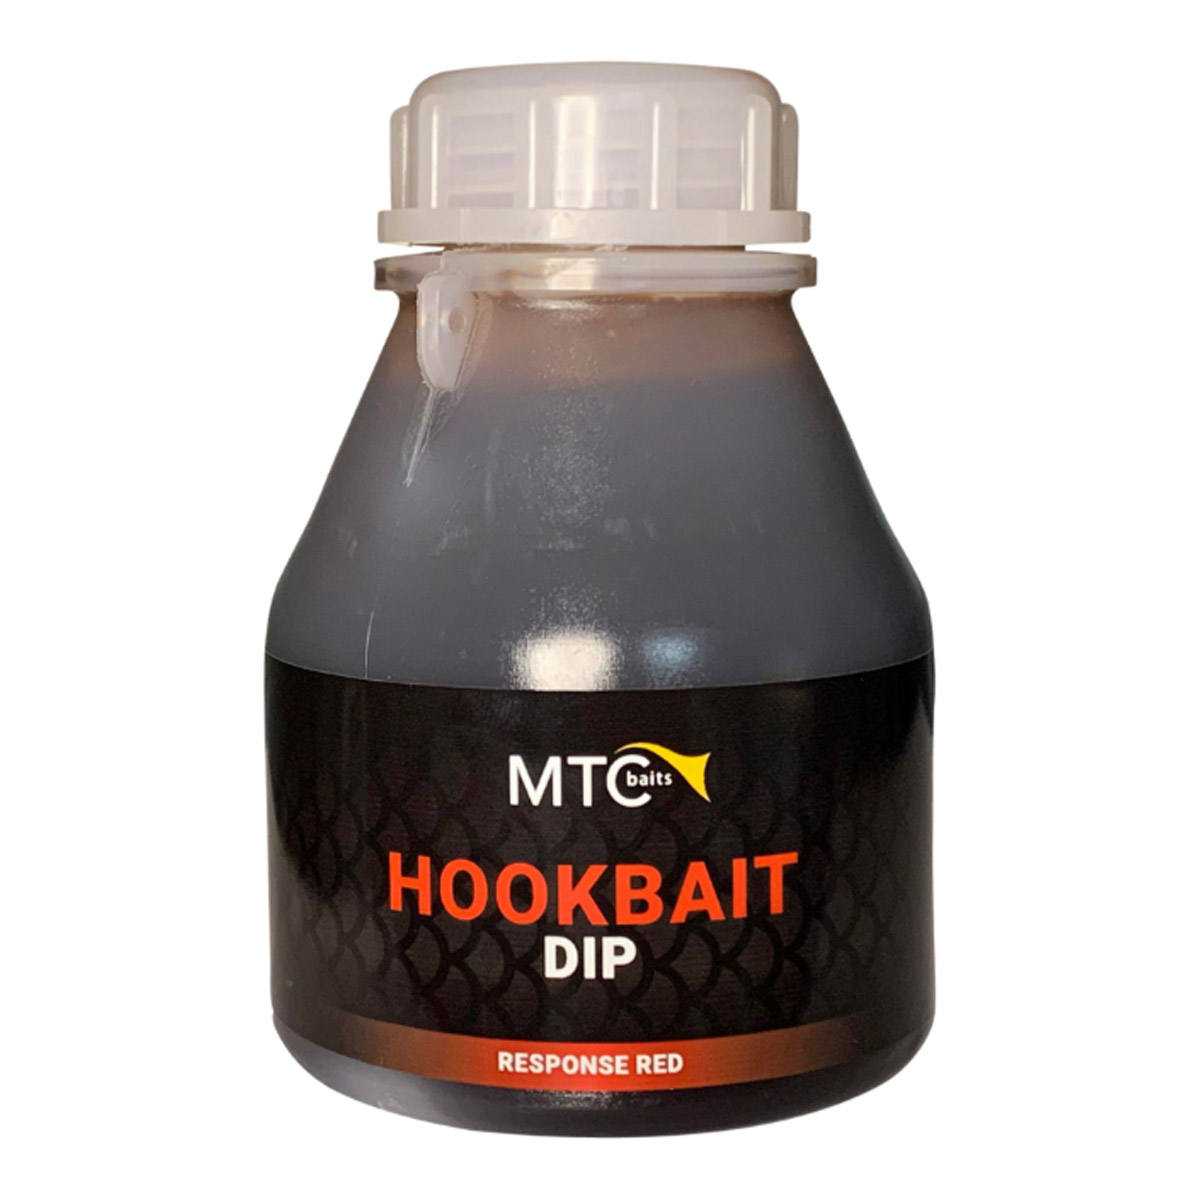 MTC Baits Hookbait Dip Response Red